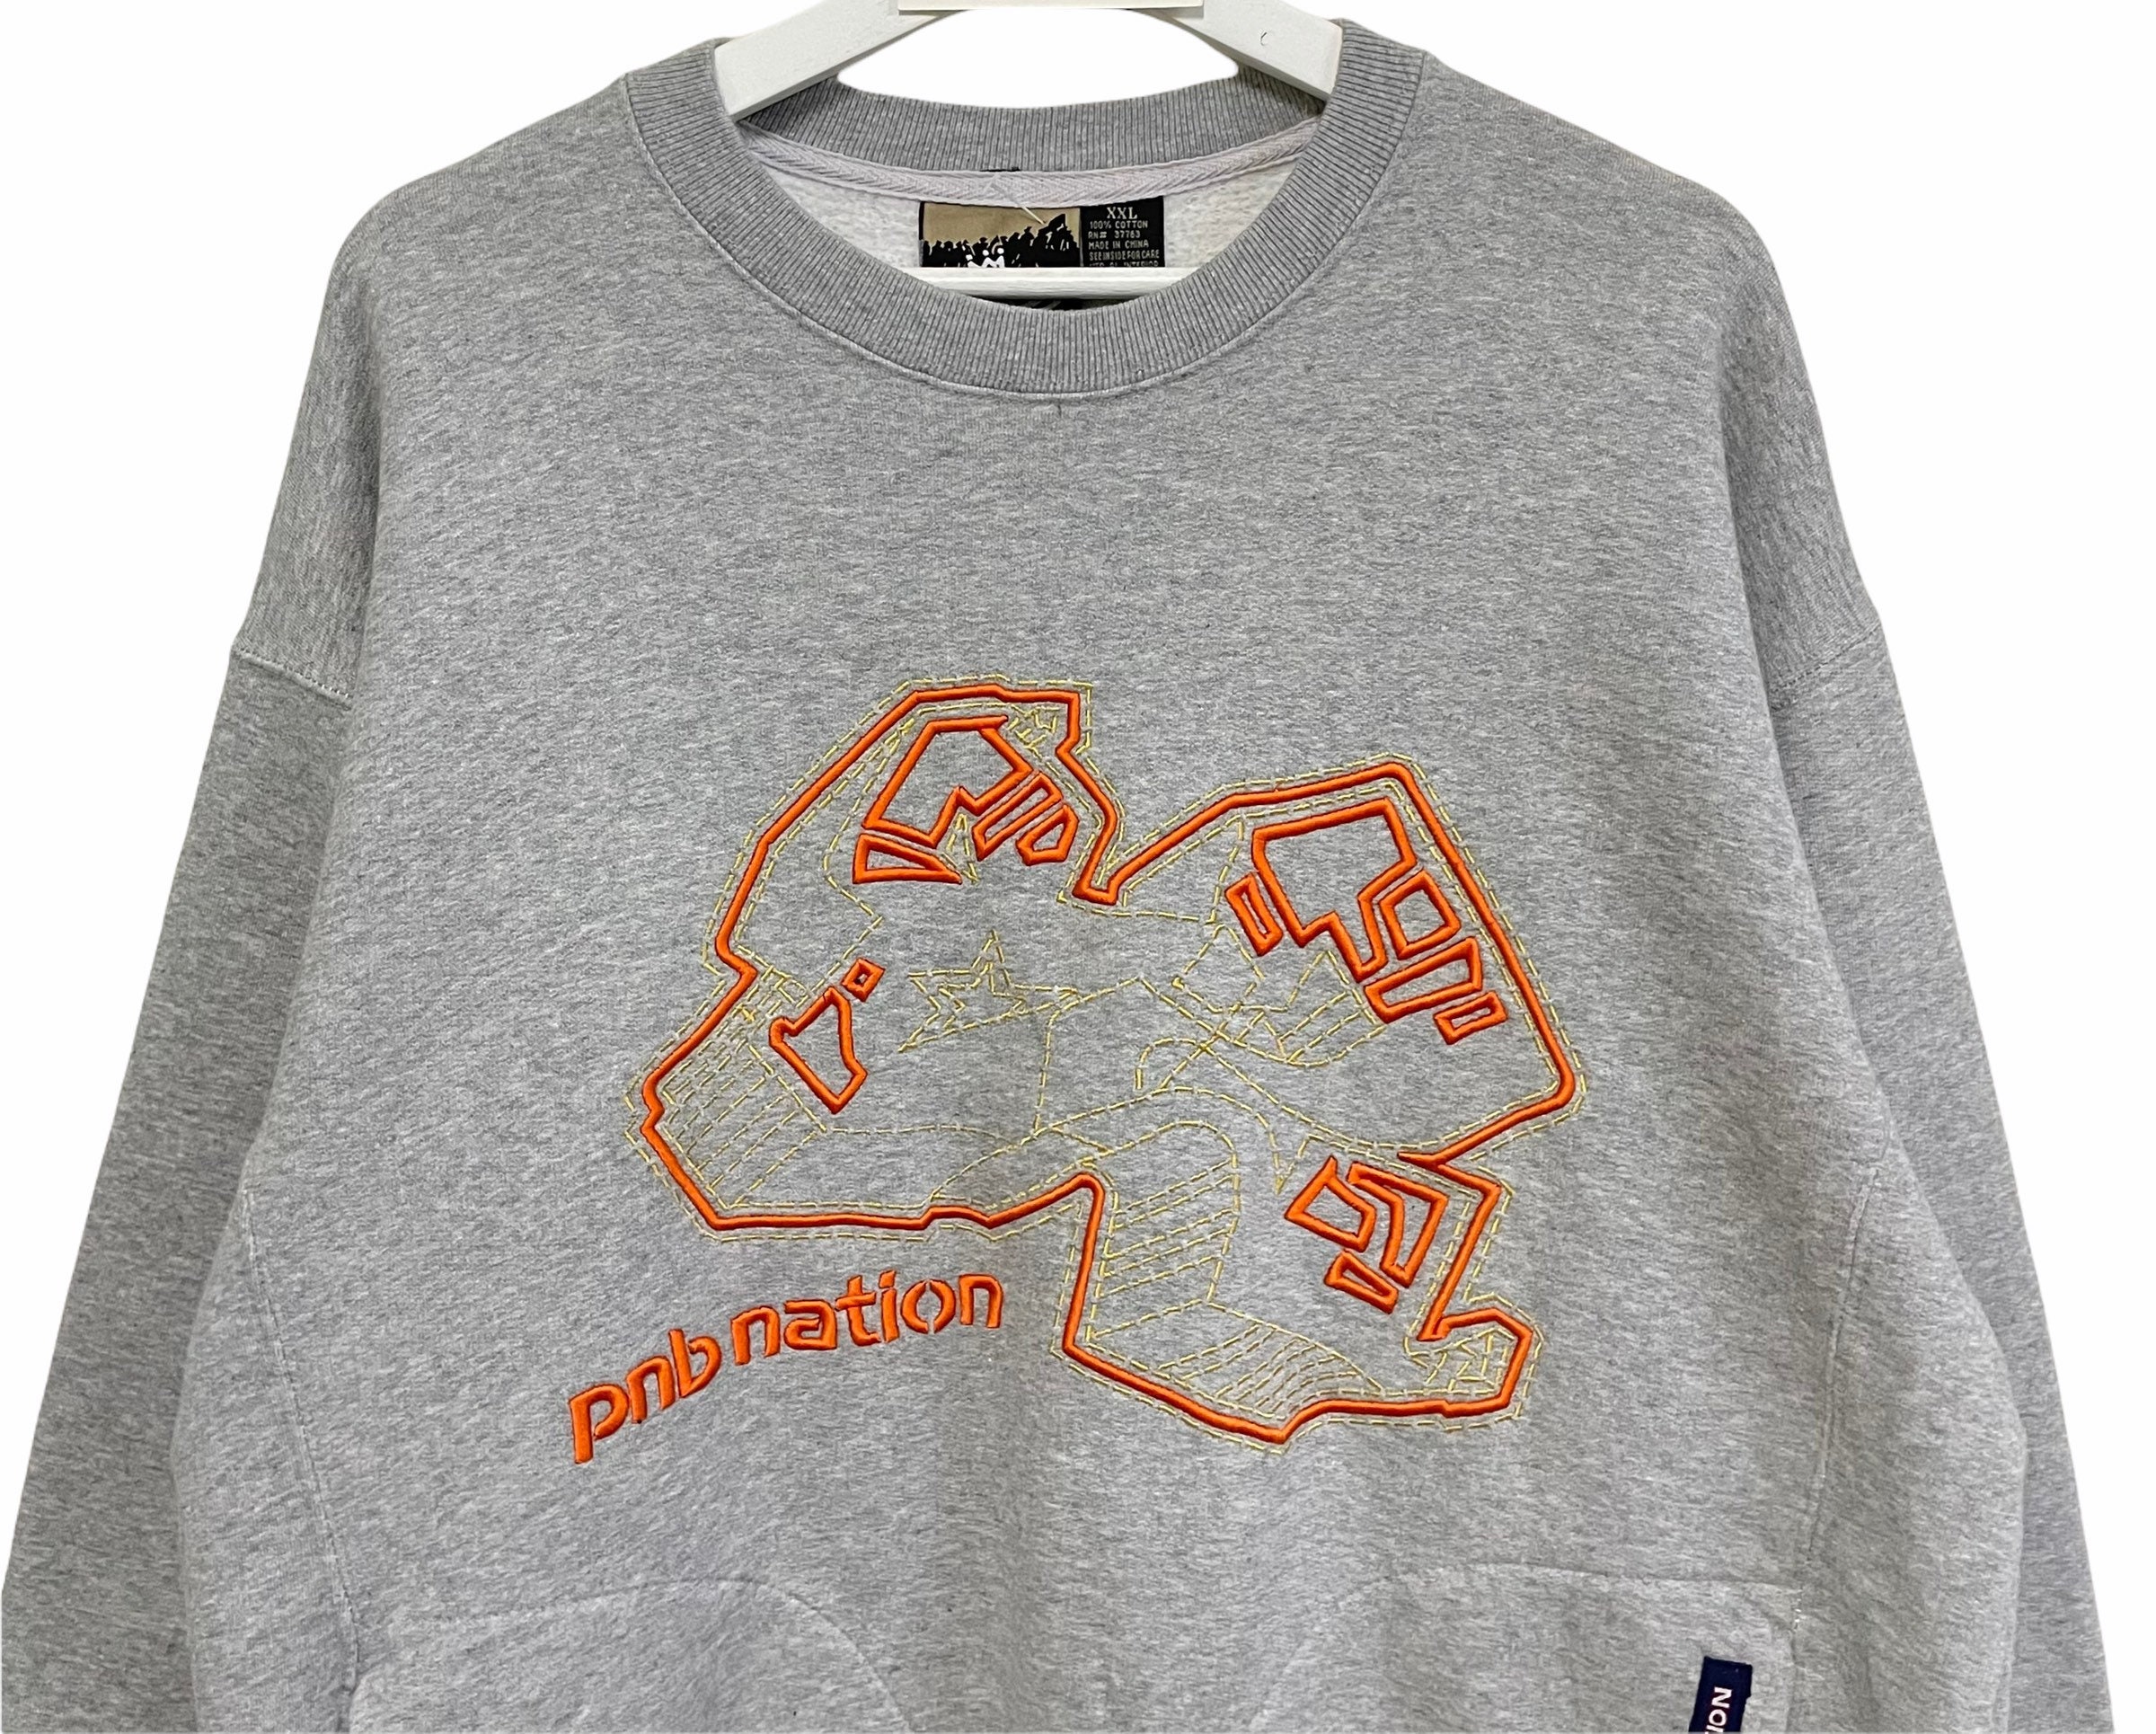 PICK Vintage Pnb Nation Clothing Hiphop Streetwear Sweater - Etsy